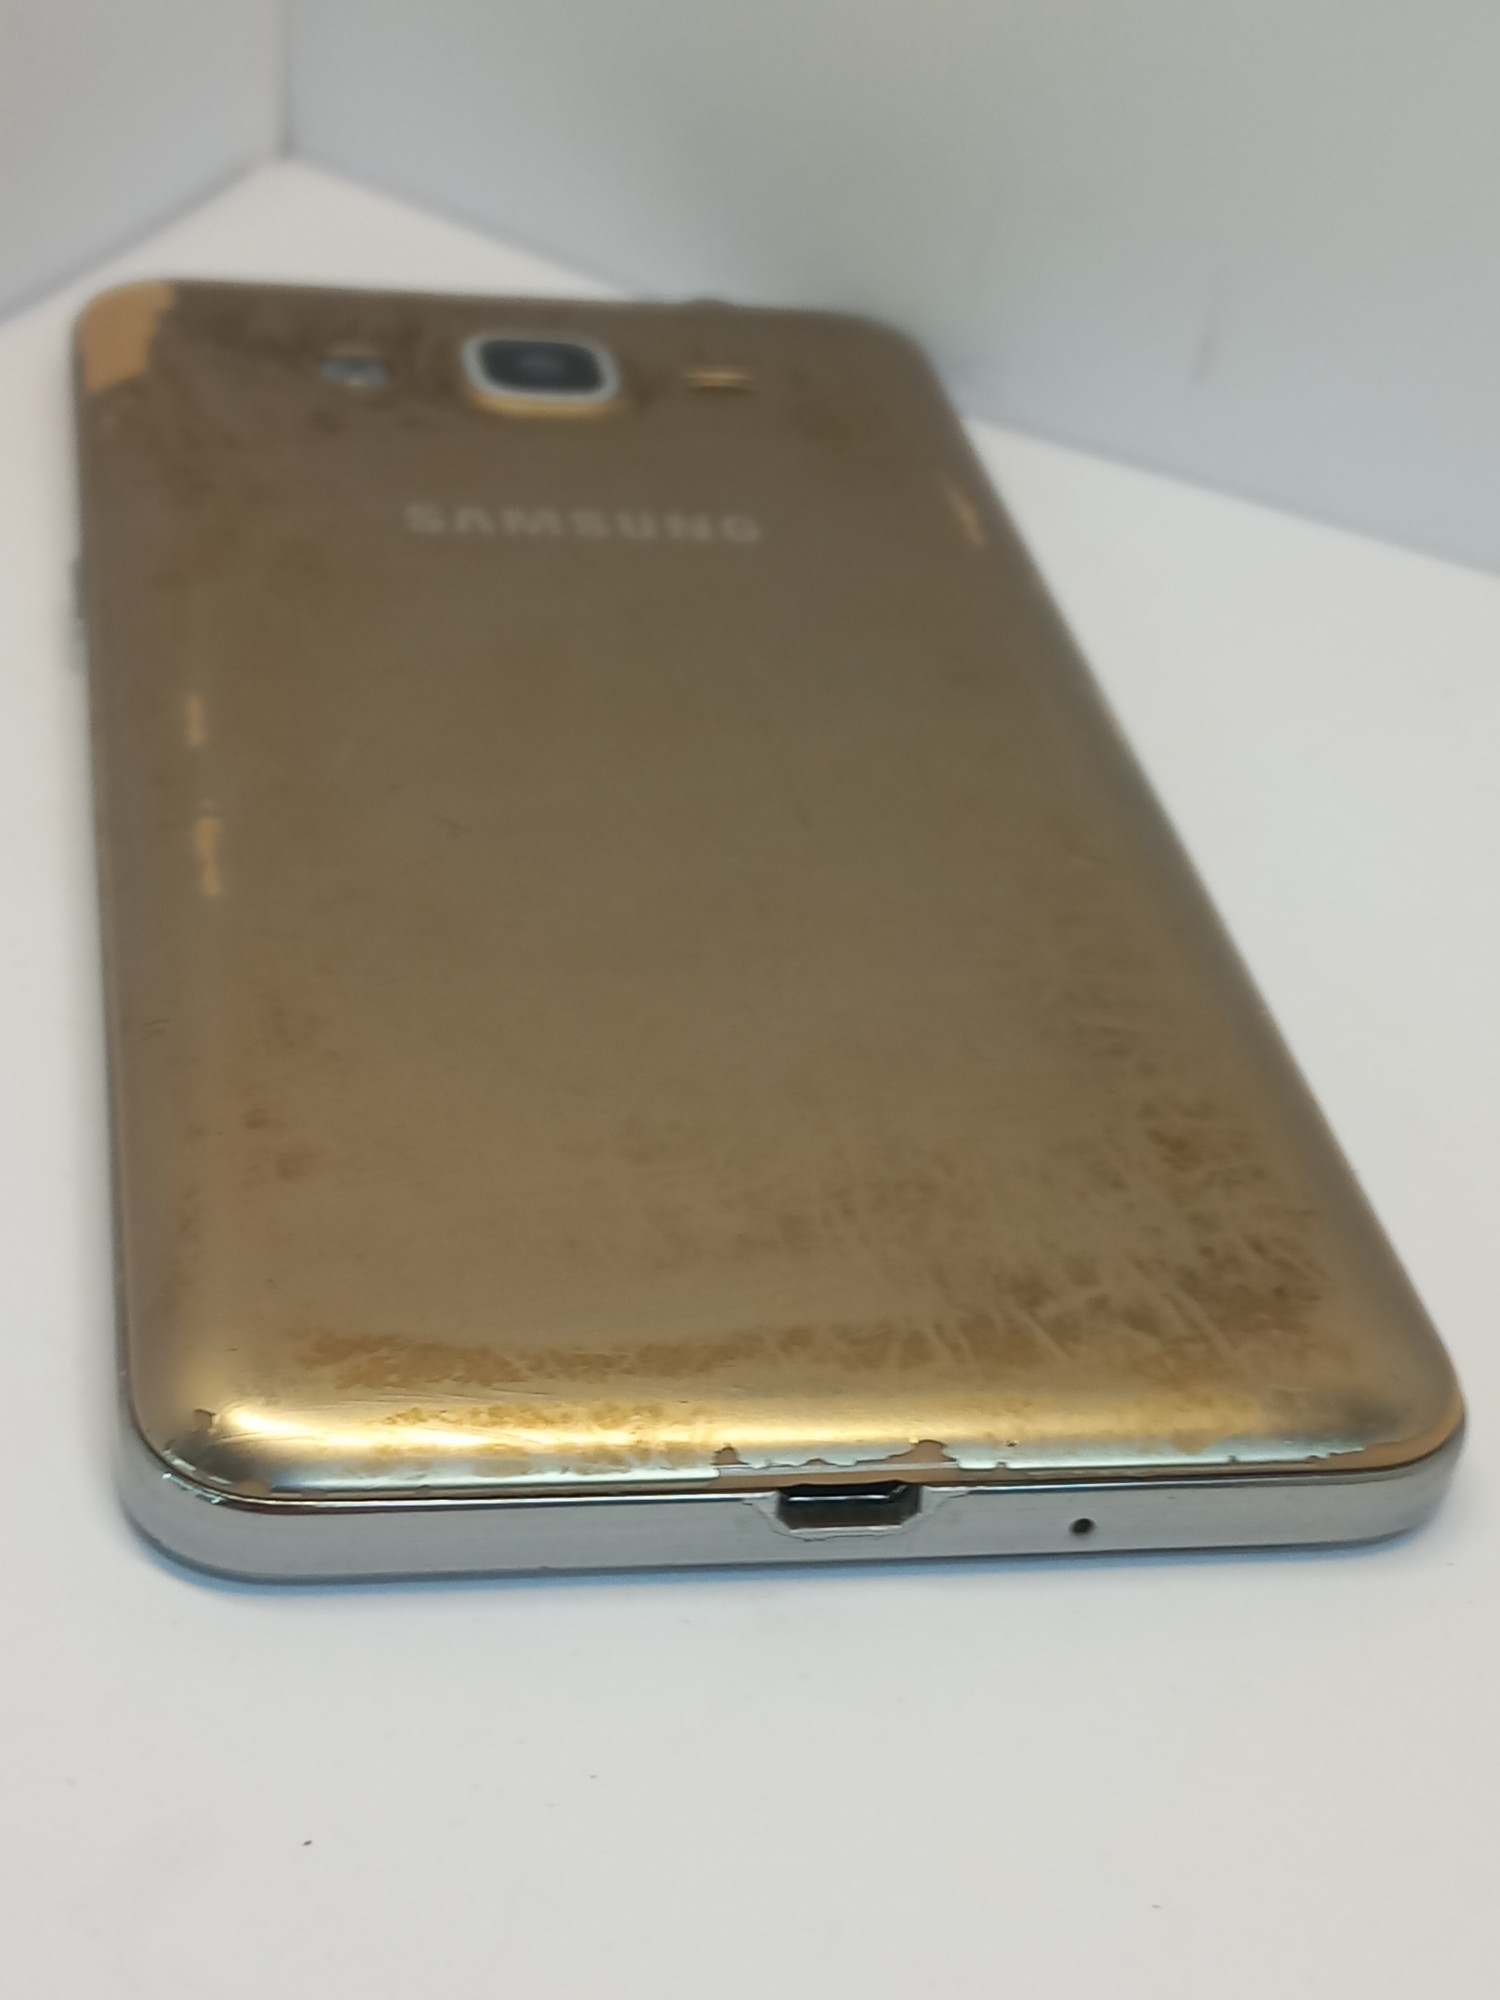 Samsung Galaxy Grand Prime VE (SM-G531H) 1/8Gb 2